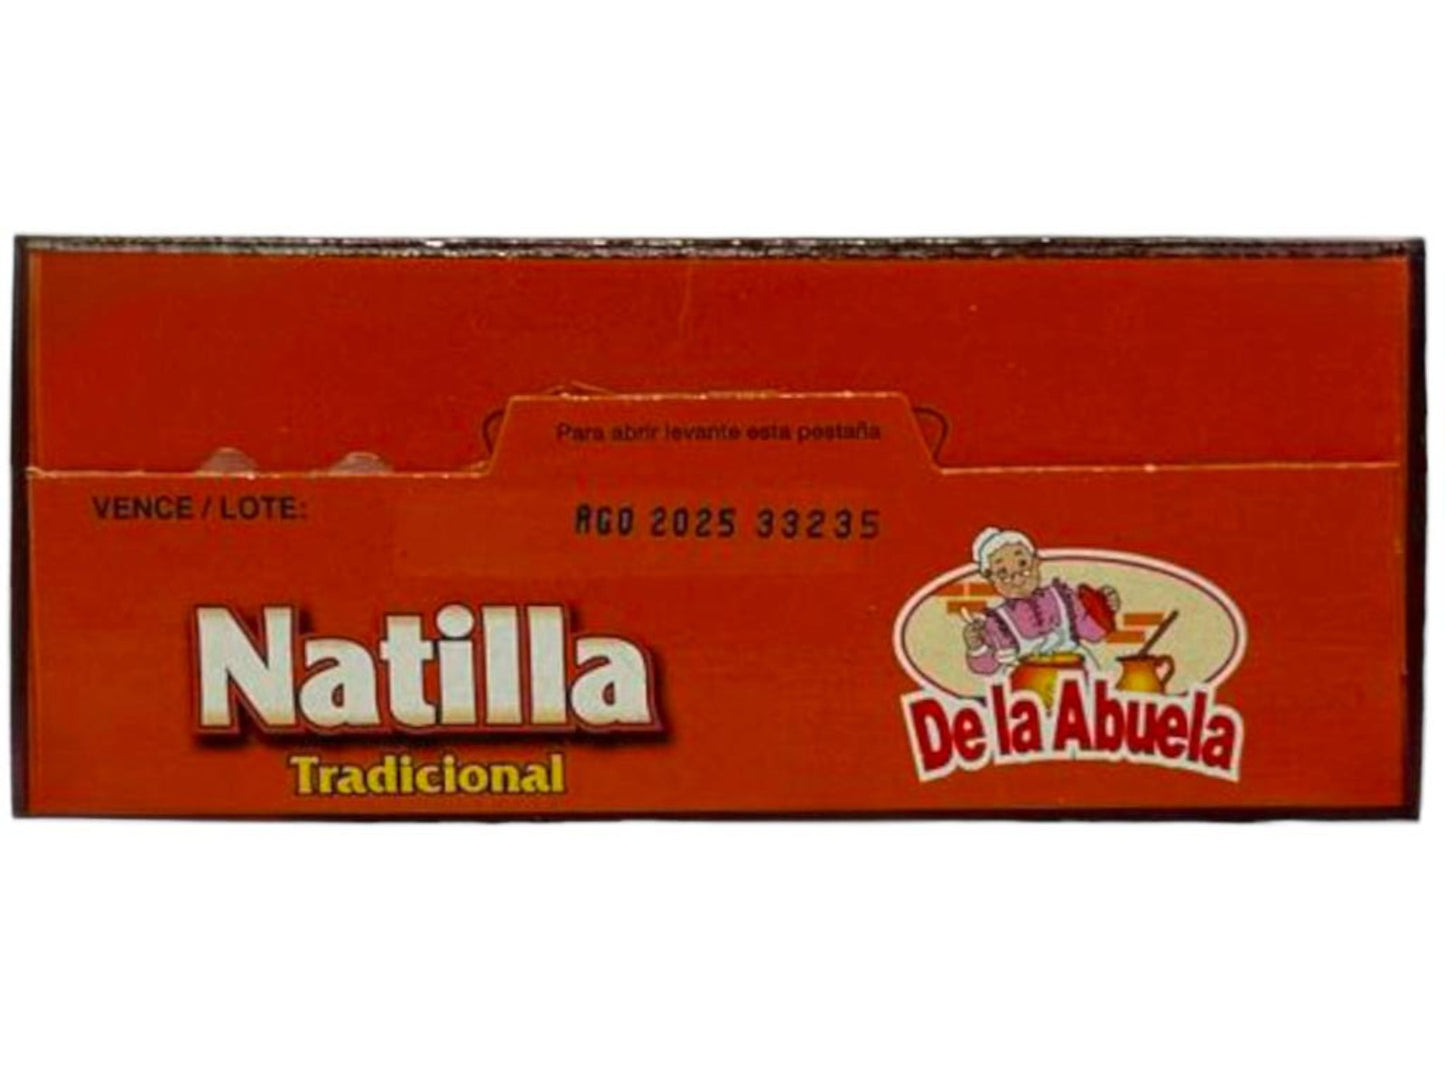 De la Abuela Colombian Natilla 300g Use By August 2025